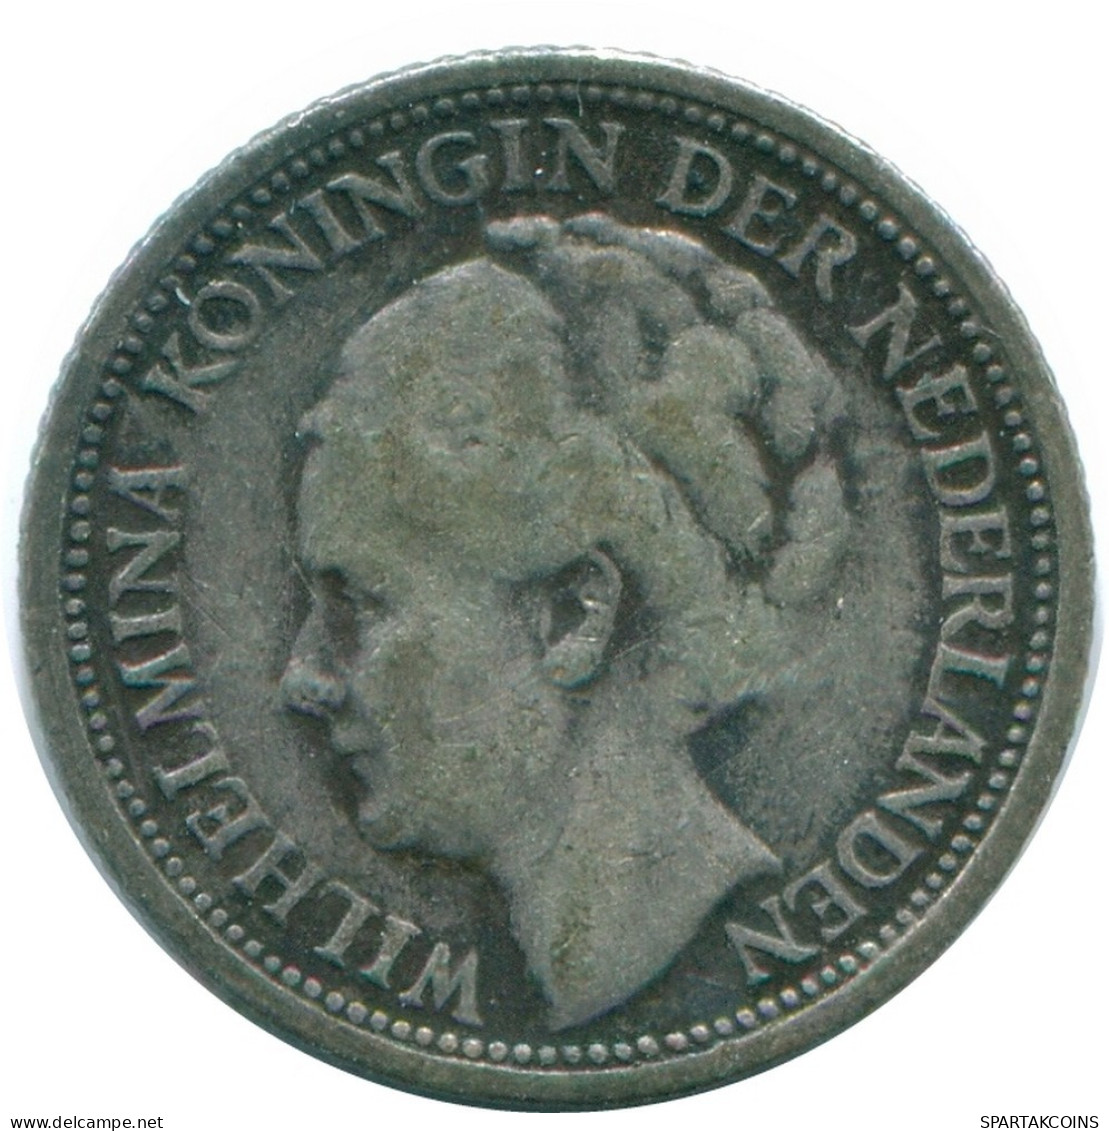 1/10 GULDEN 1947 CURACAO Netherlands SILVER Colonial Coin #NL11880.3.U.A - Curacao